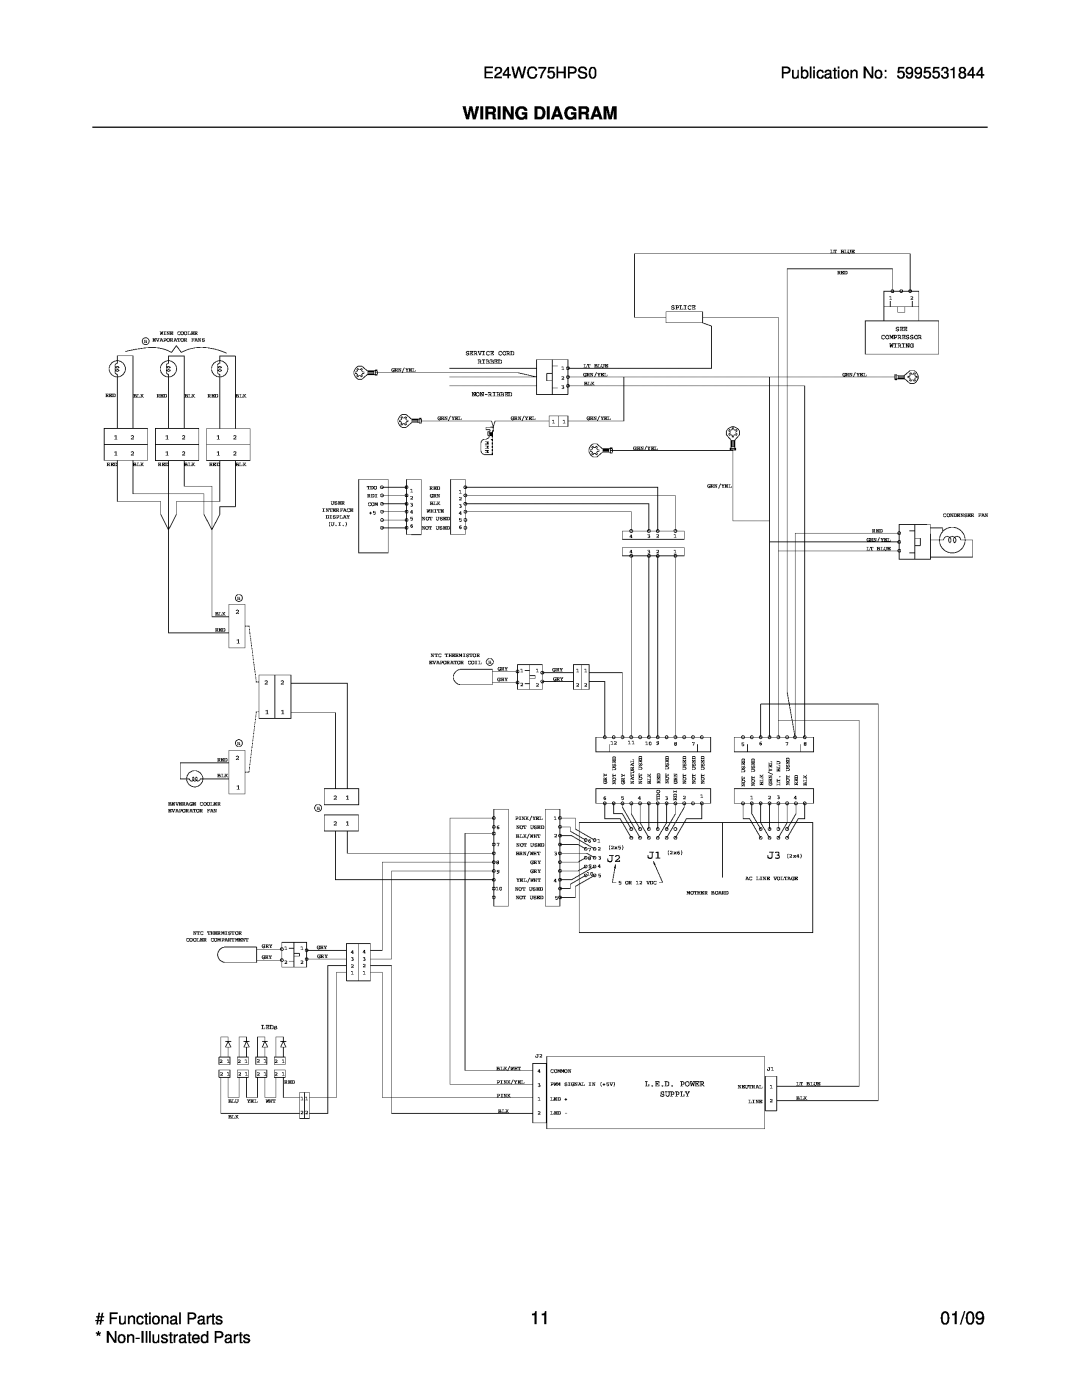 Electrolux E24WC75HPS0 manual Wiring Diagram, 01/09, Publication No 